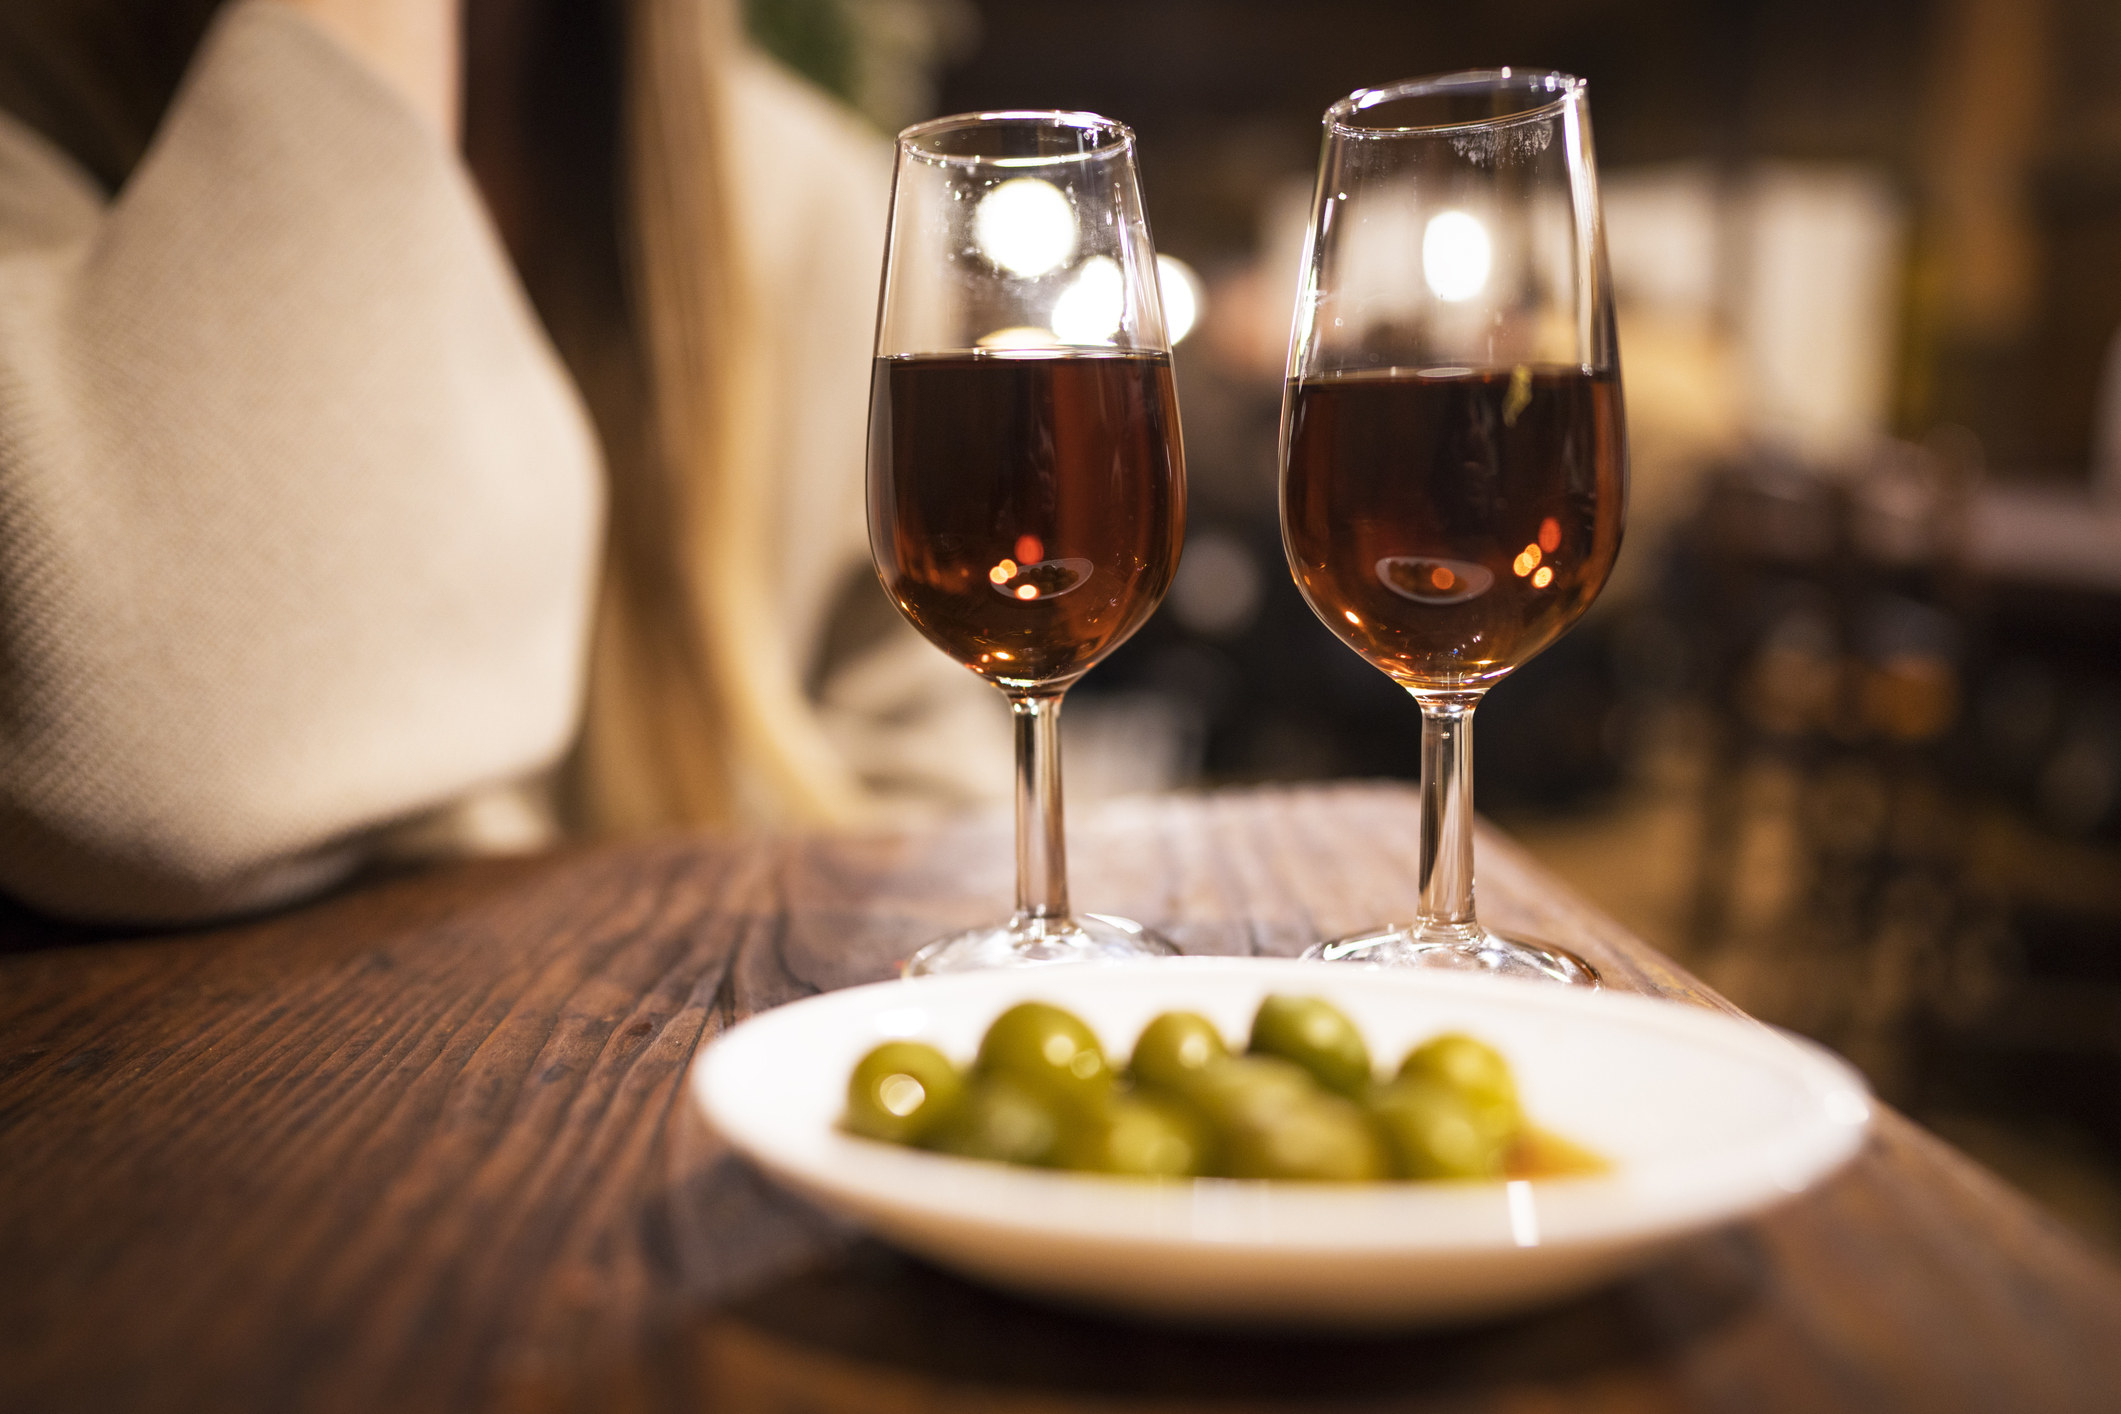 Vermouth and olives at a bar.